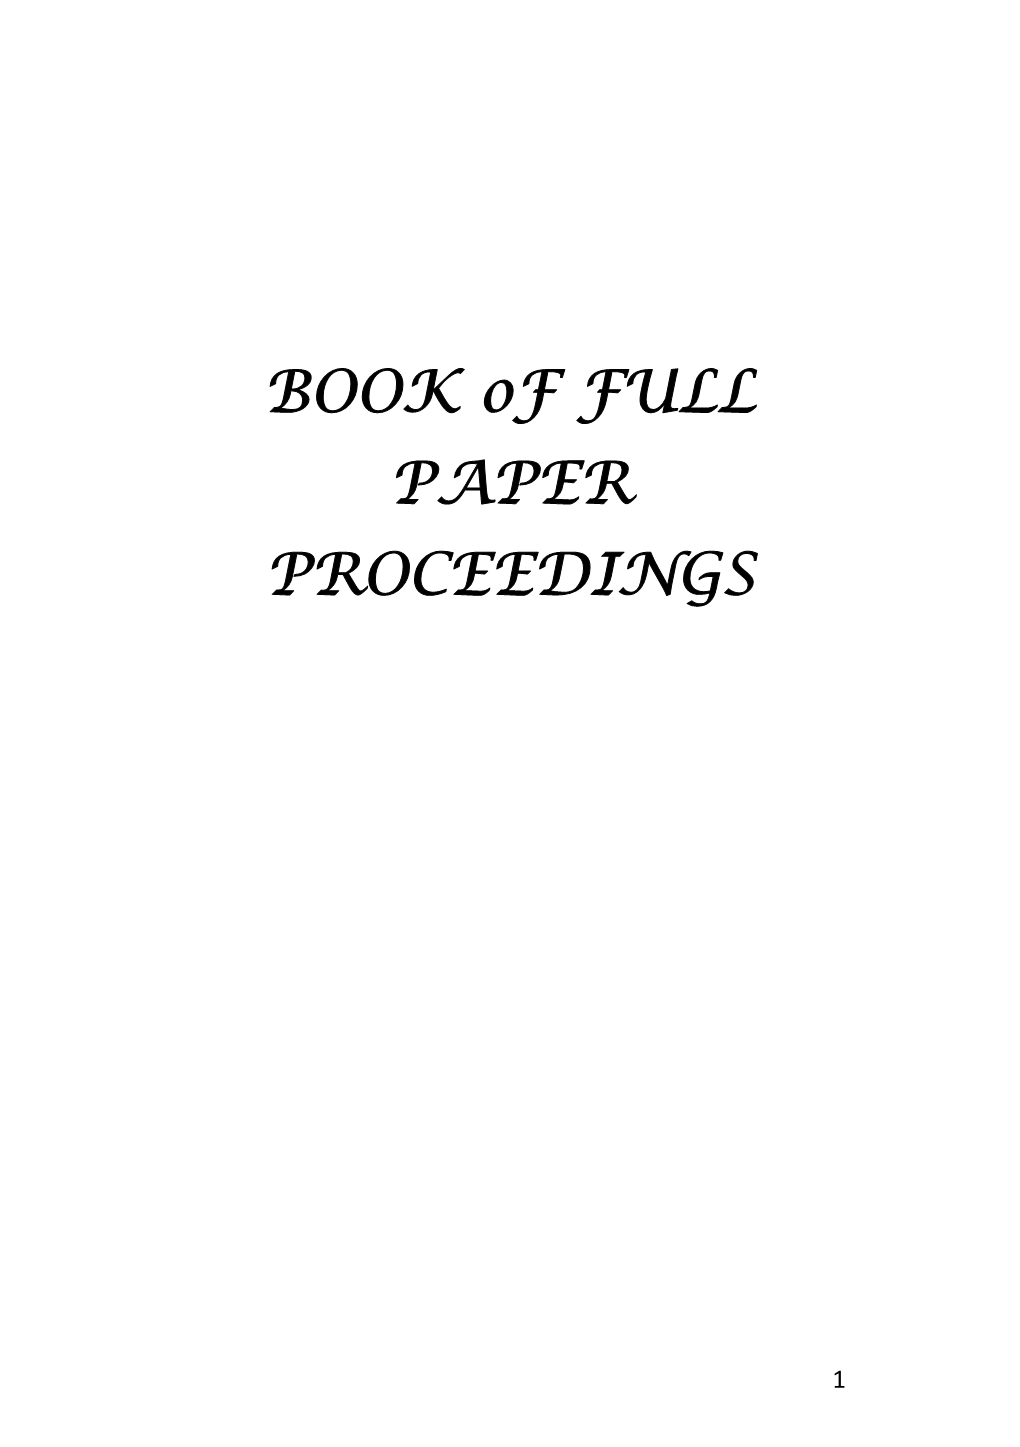 Full Paper Proceedings